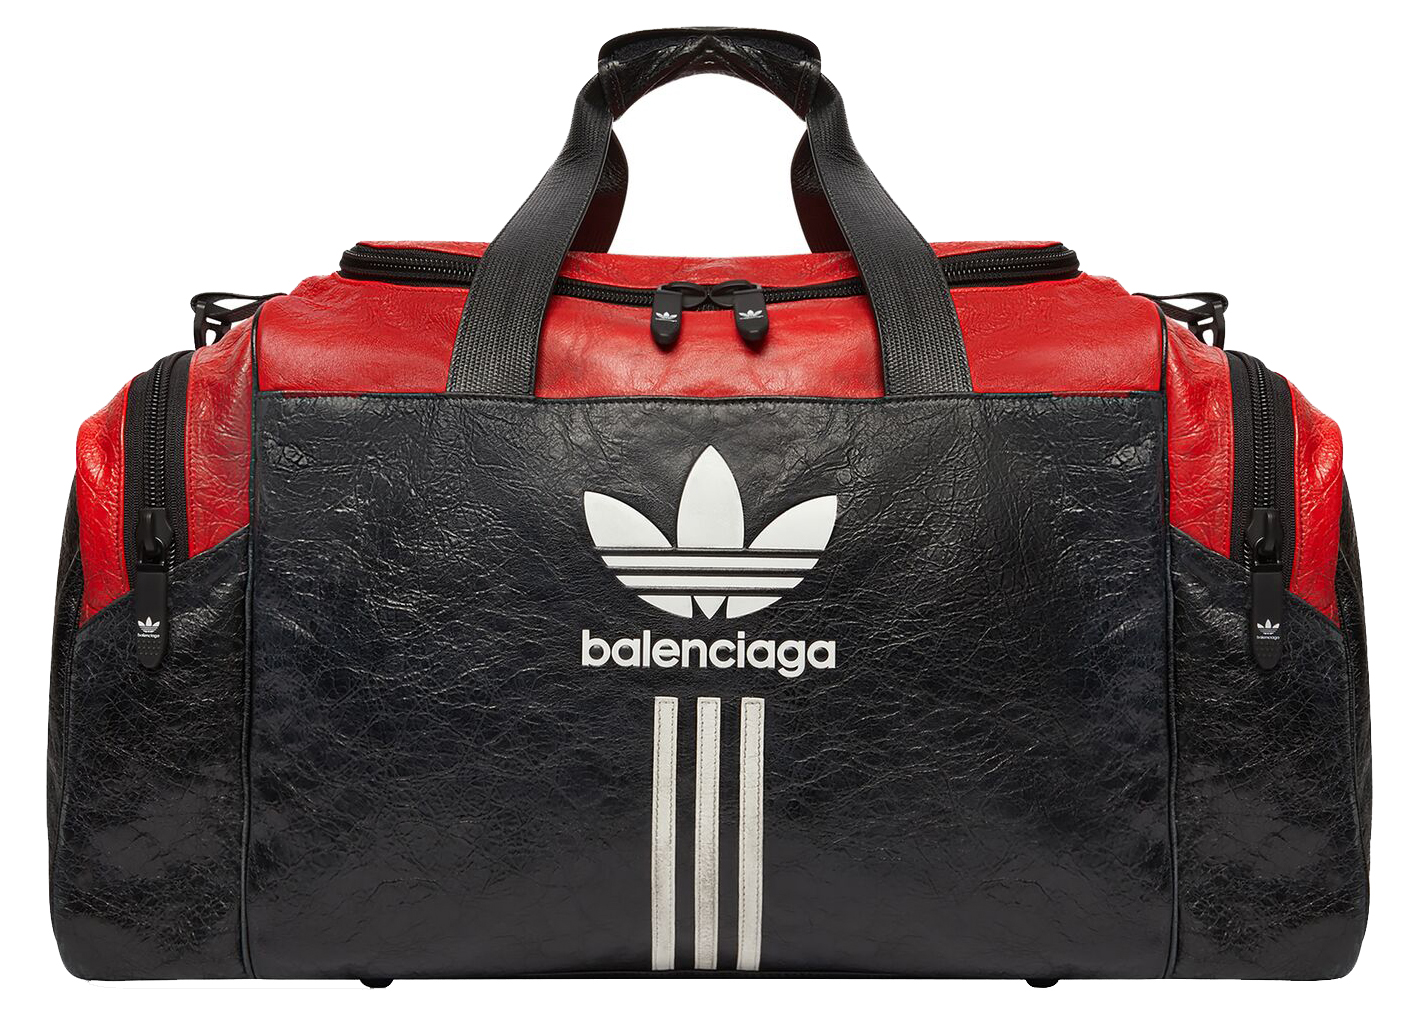 Balenciaga x adidas Gym Bag Black/Red in Aged Arena Lambskin